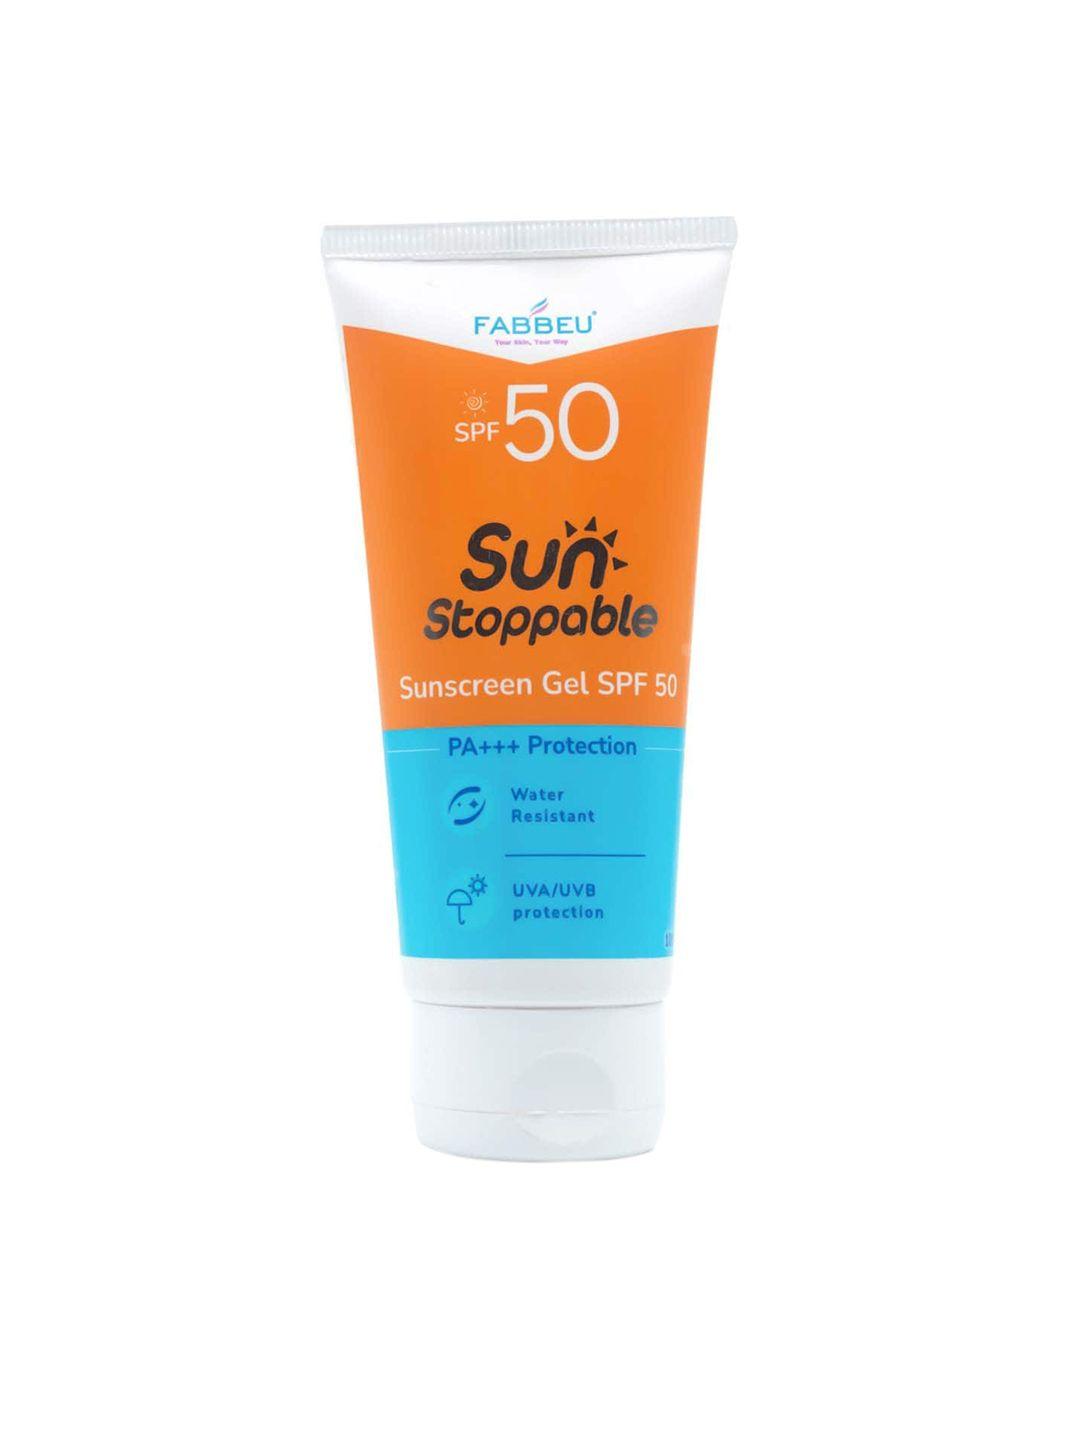 fabbeu sun stoppable sunscreen gel spf 50-100gm